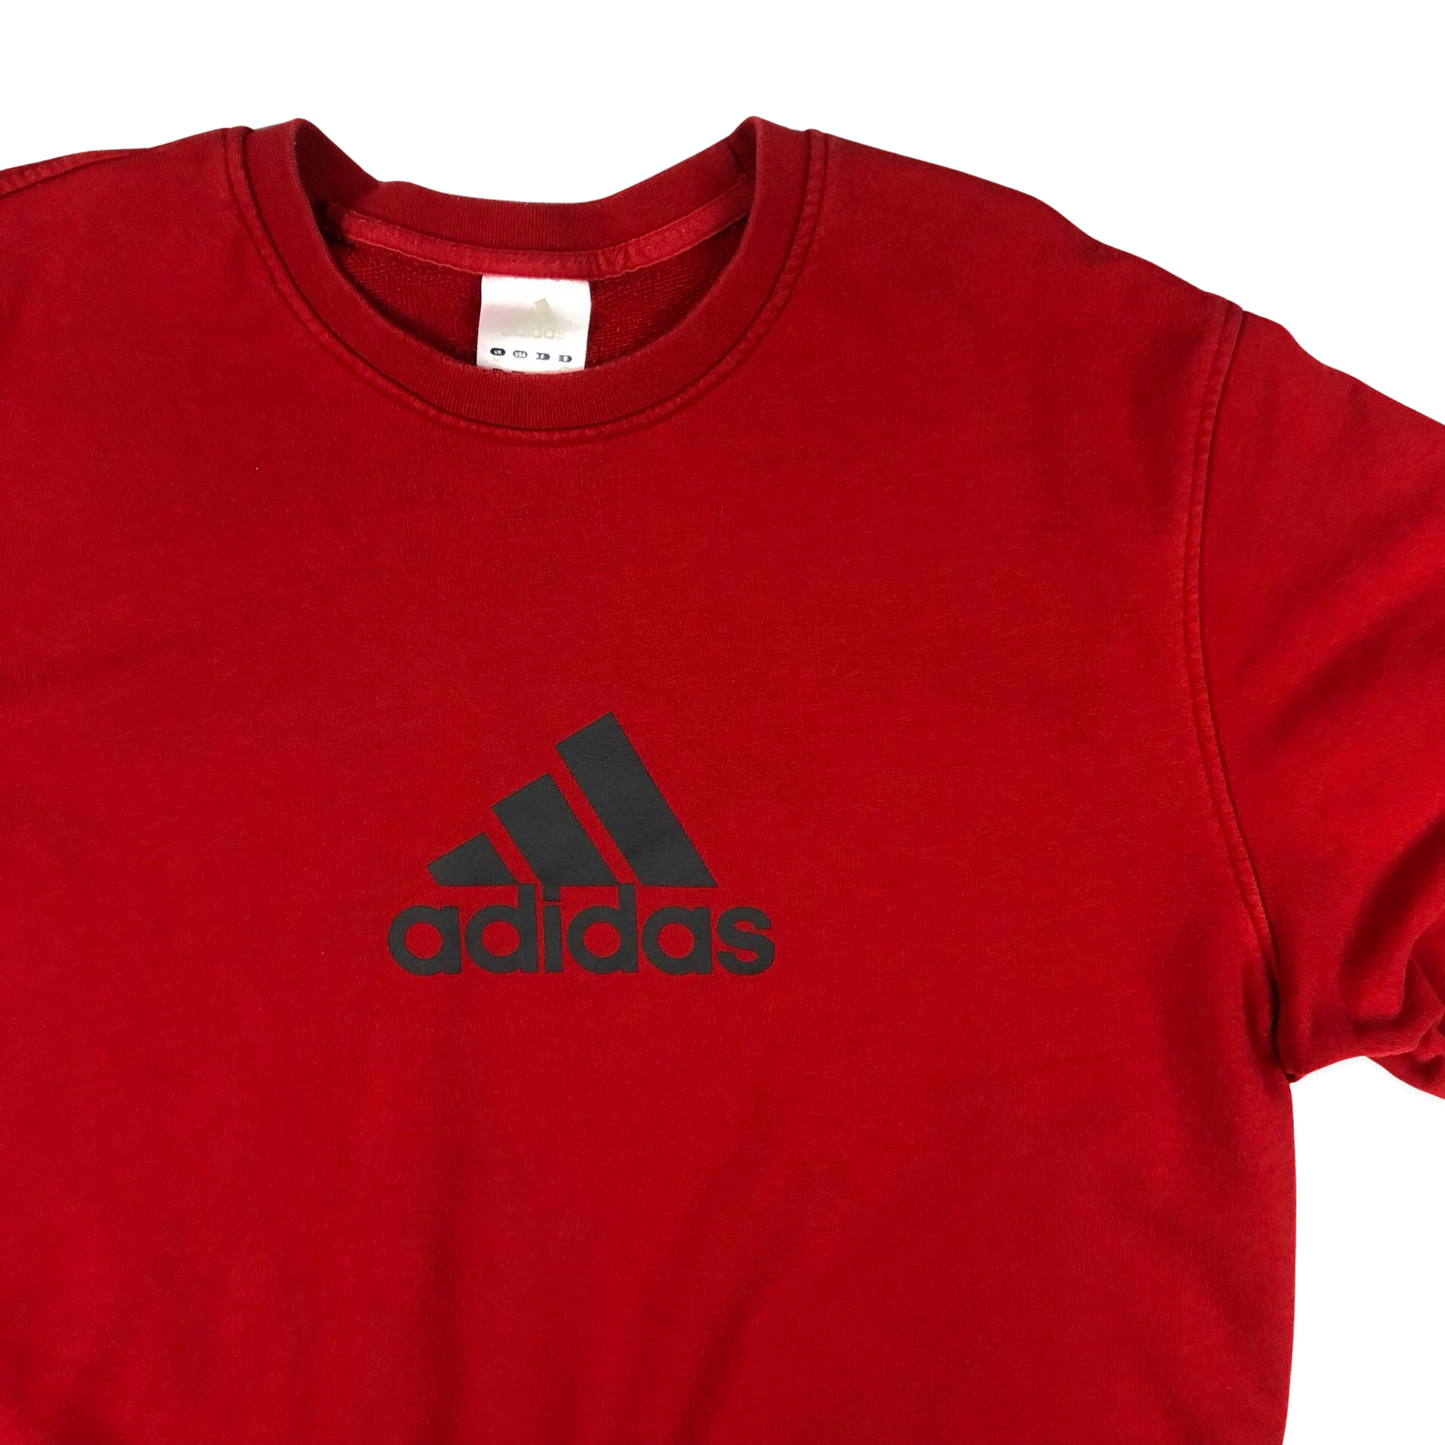 Vintage 00s Adidas Red Logo Print Sweatshirt XXL